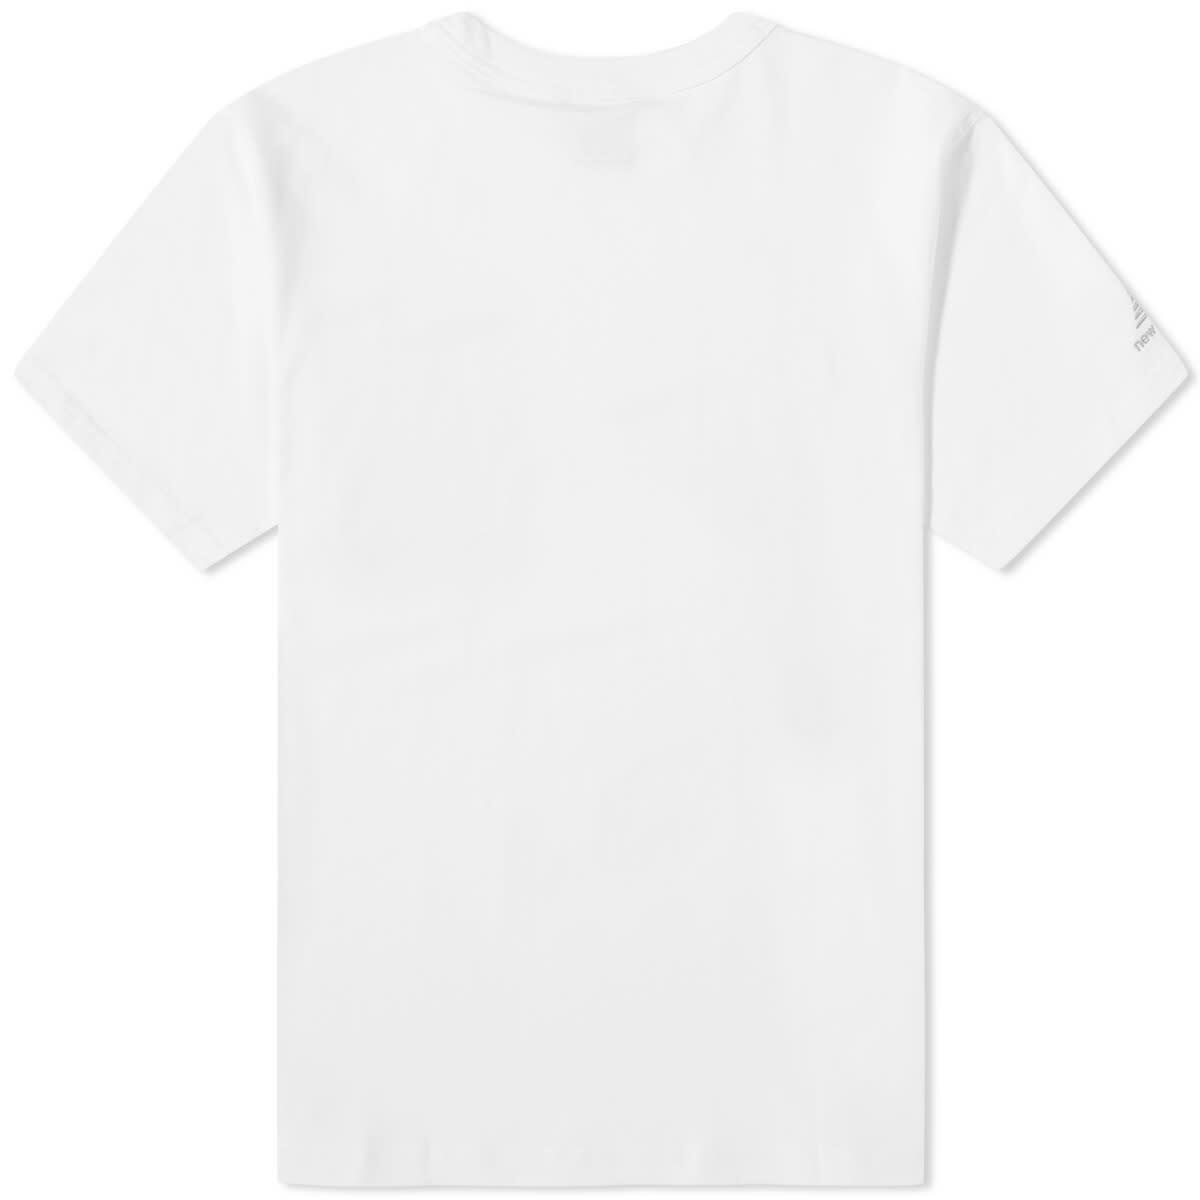 New Balance x Rich Paul T-Shirt in White New Balance